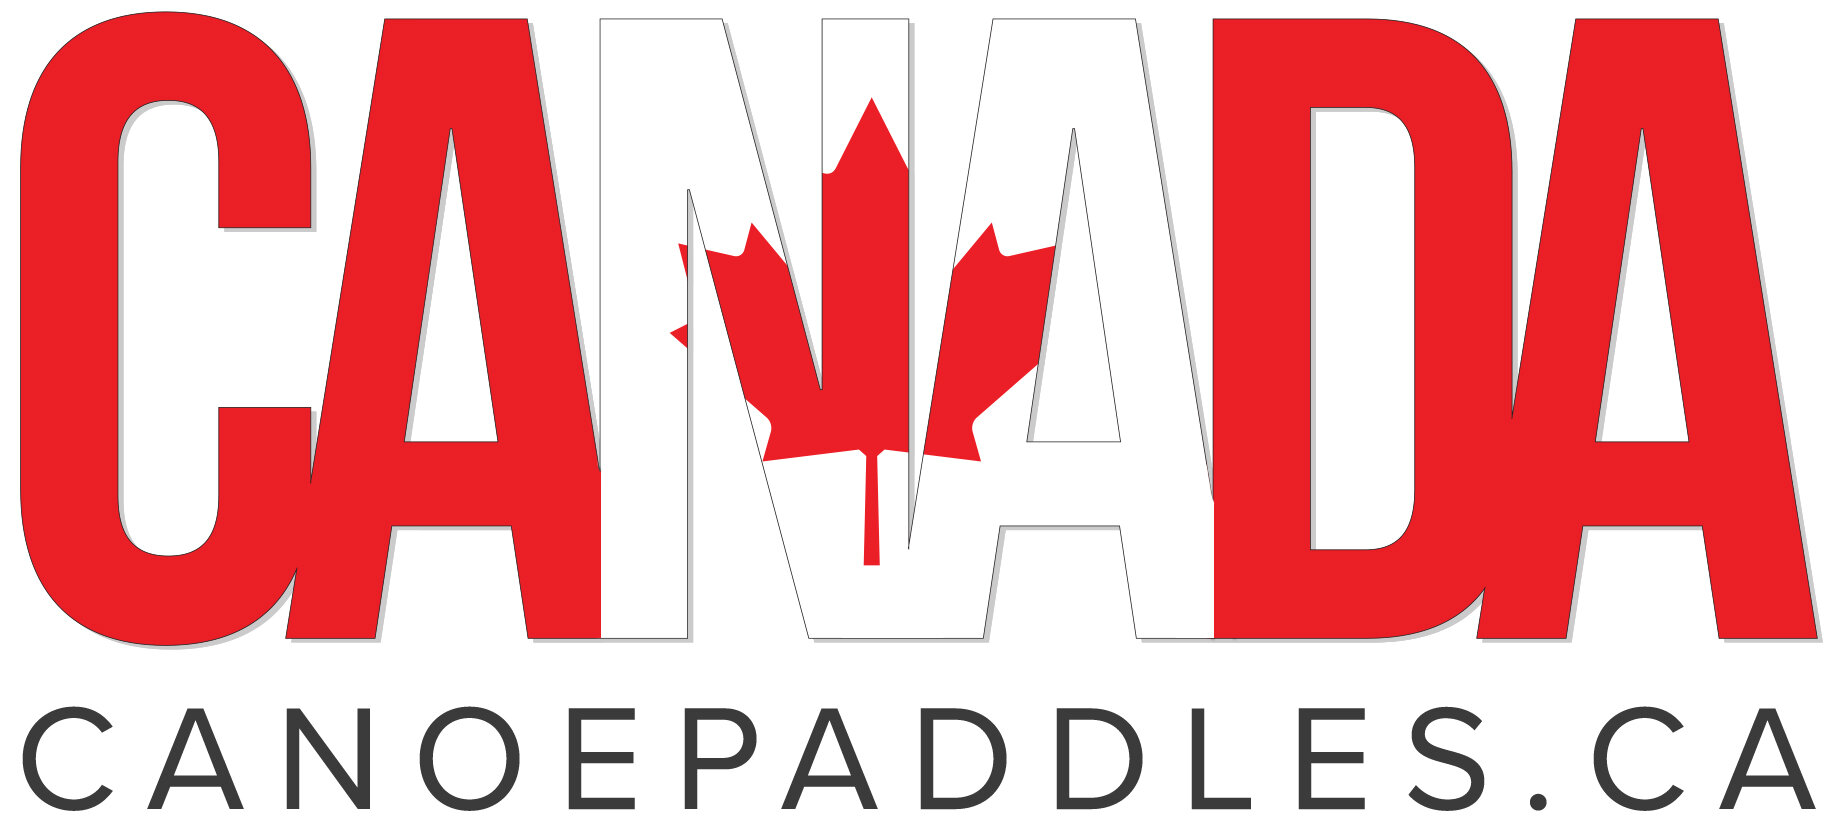 Canadian Made Canoe Paddles